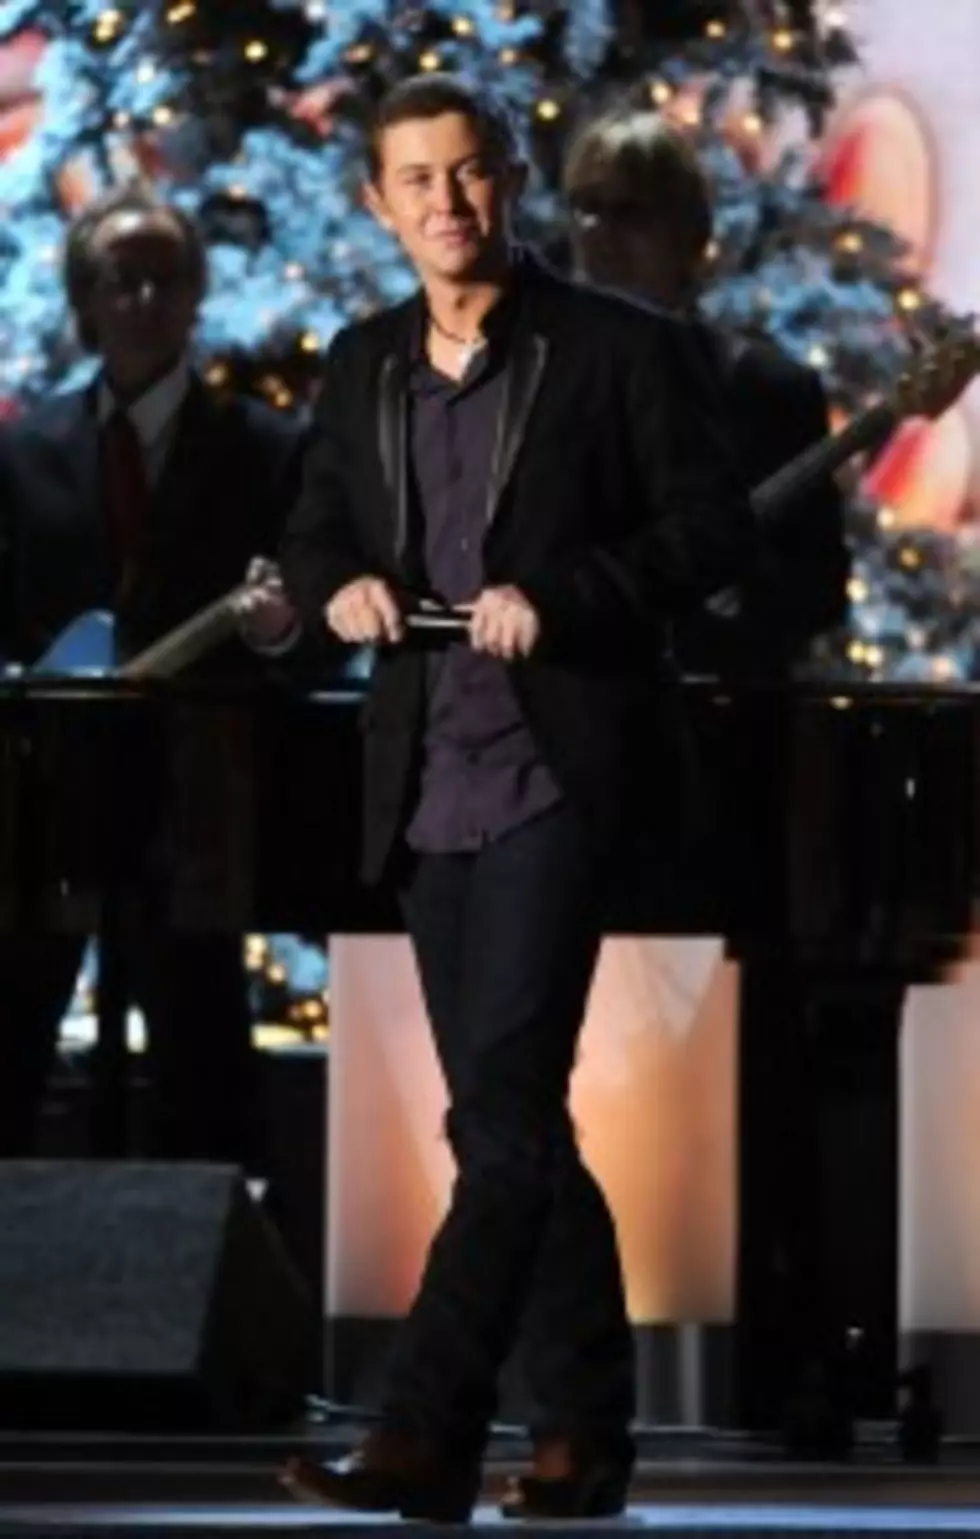 American Idol Champ Scotty McCreery Lip Sync Mishap [VIDEO]